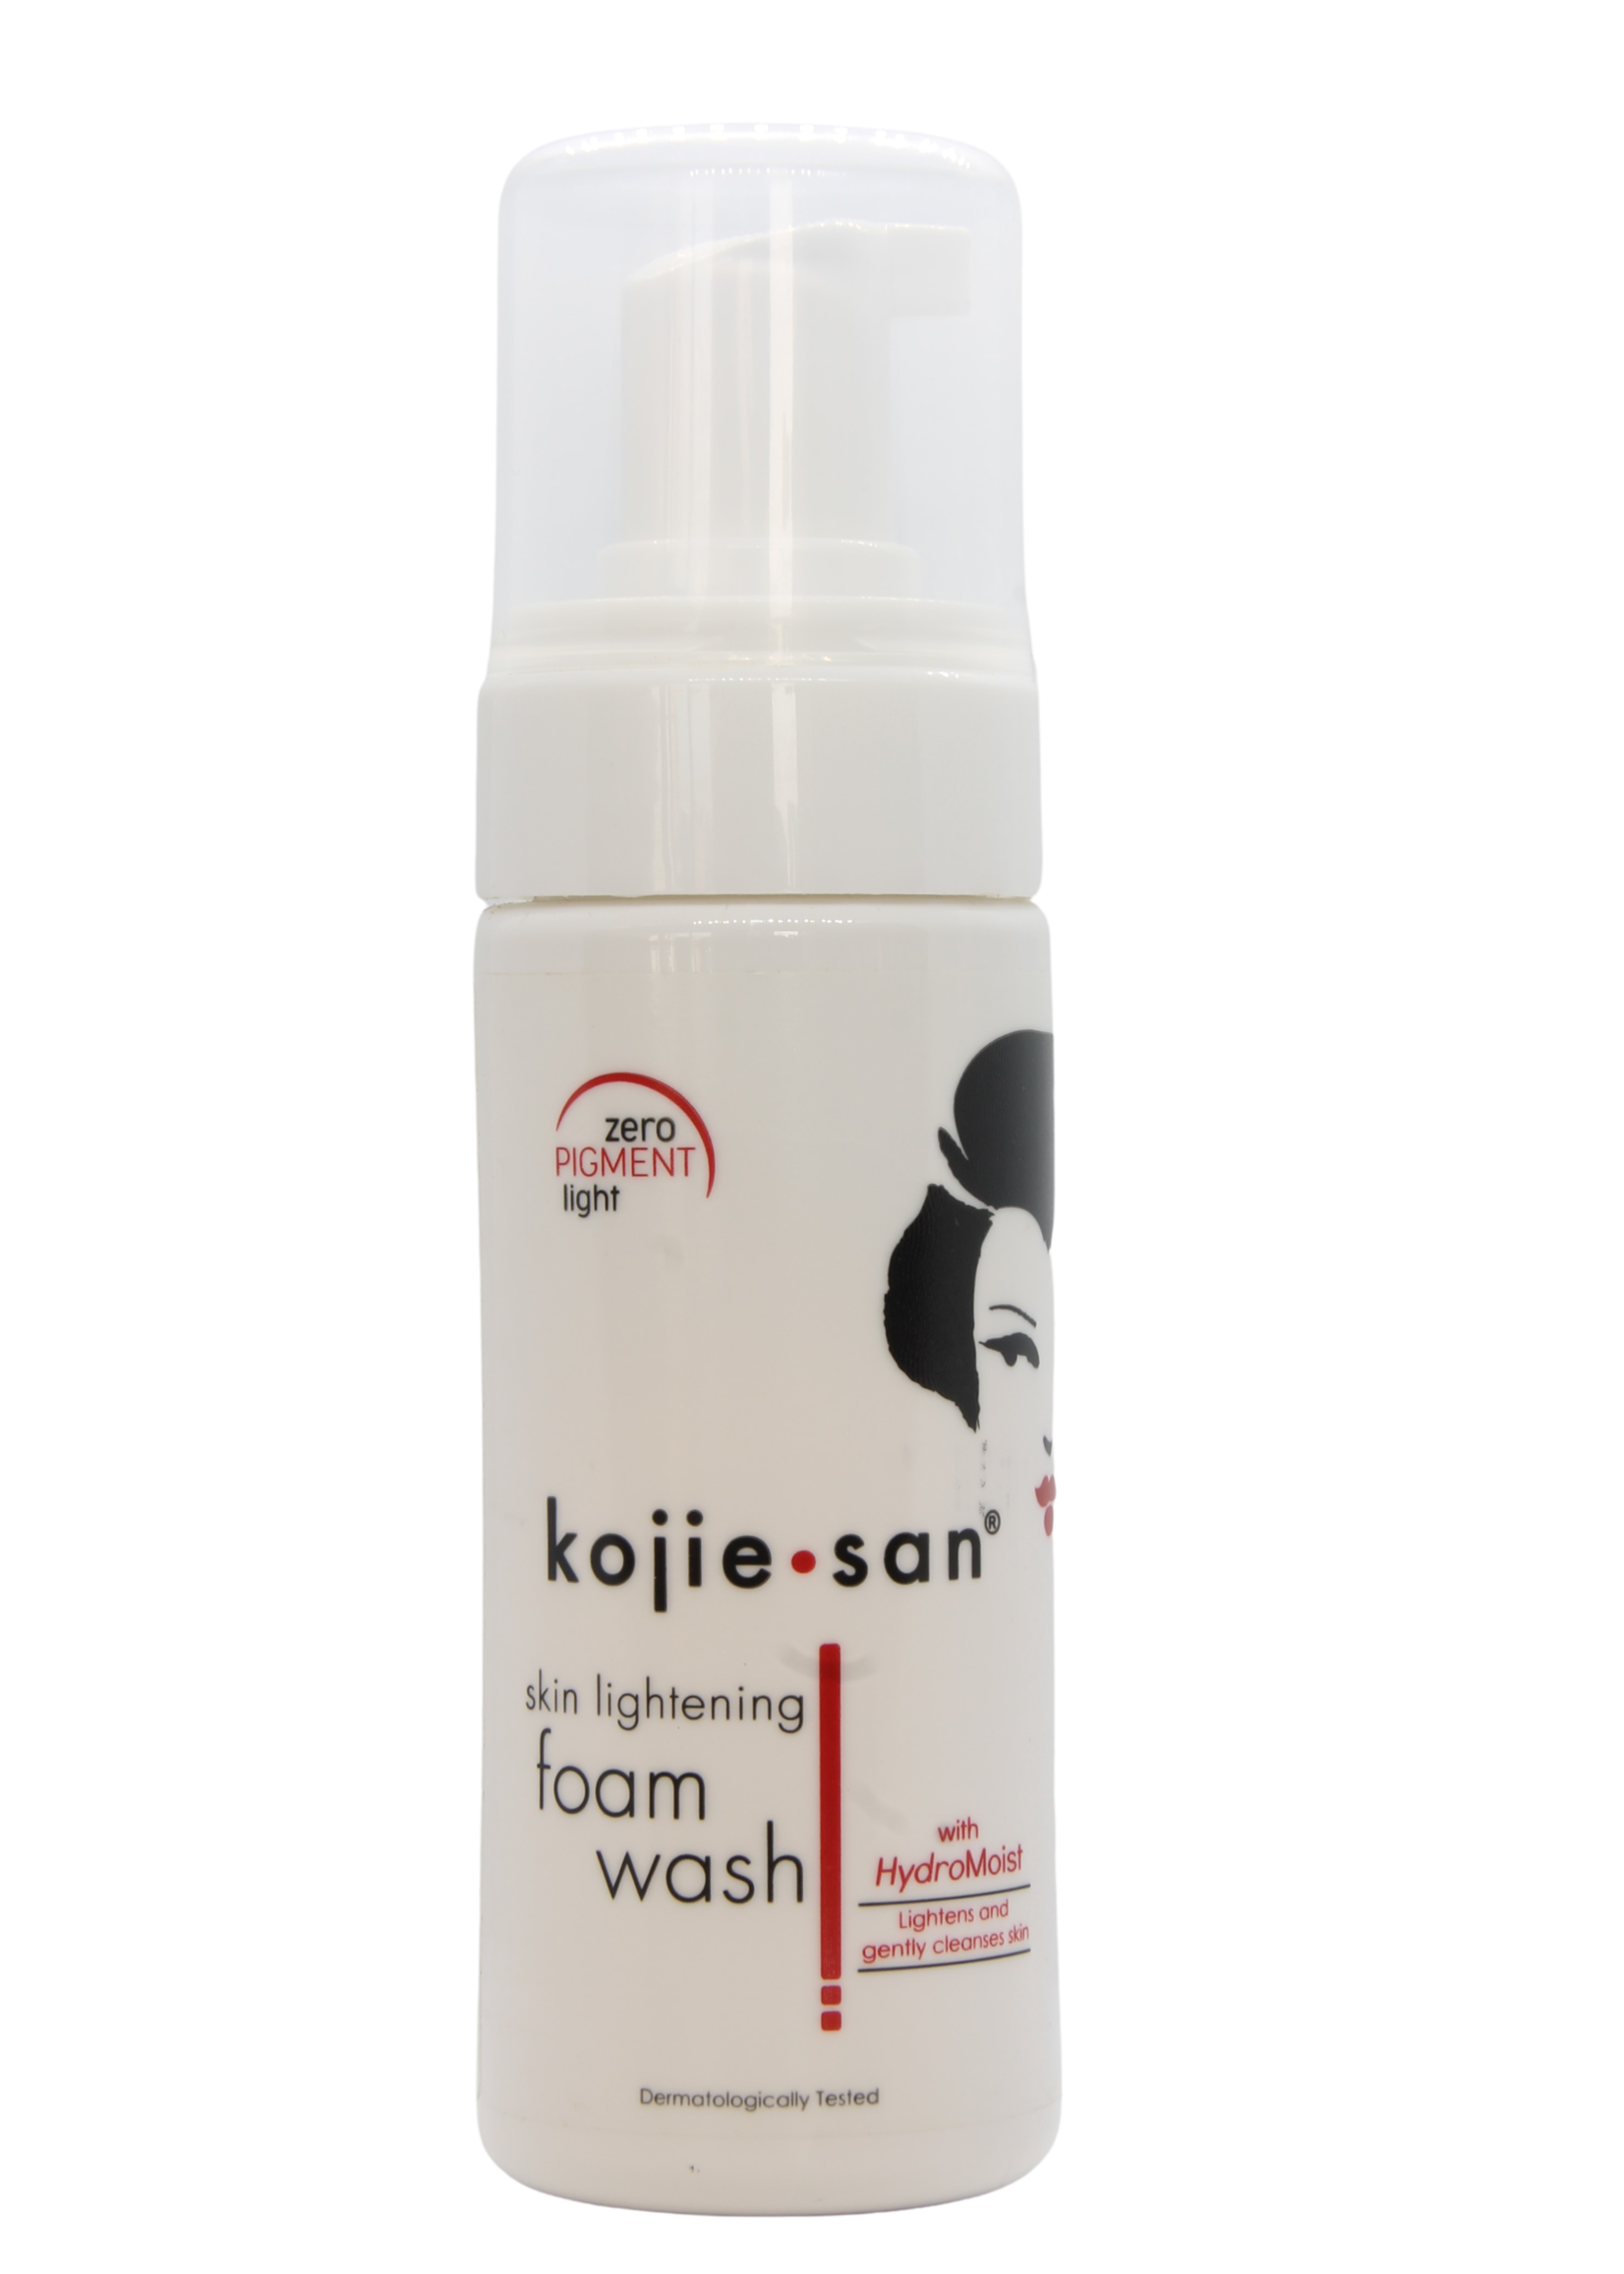 Kojie San skin lightening foam wash 150ml